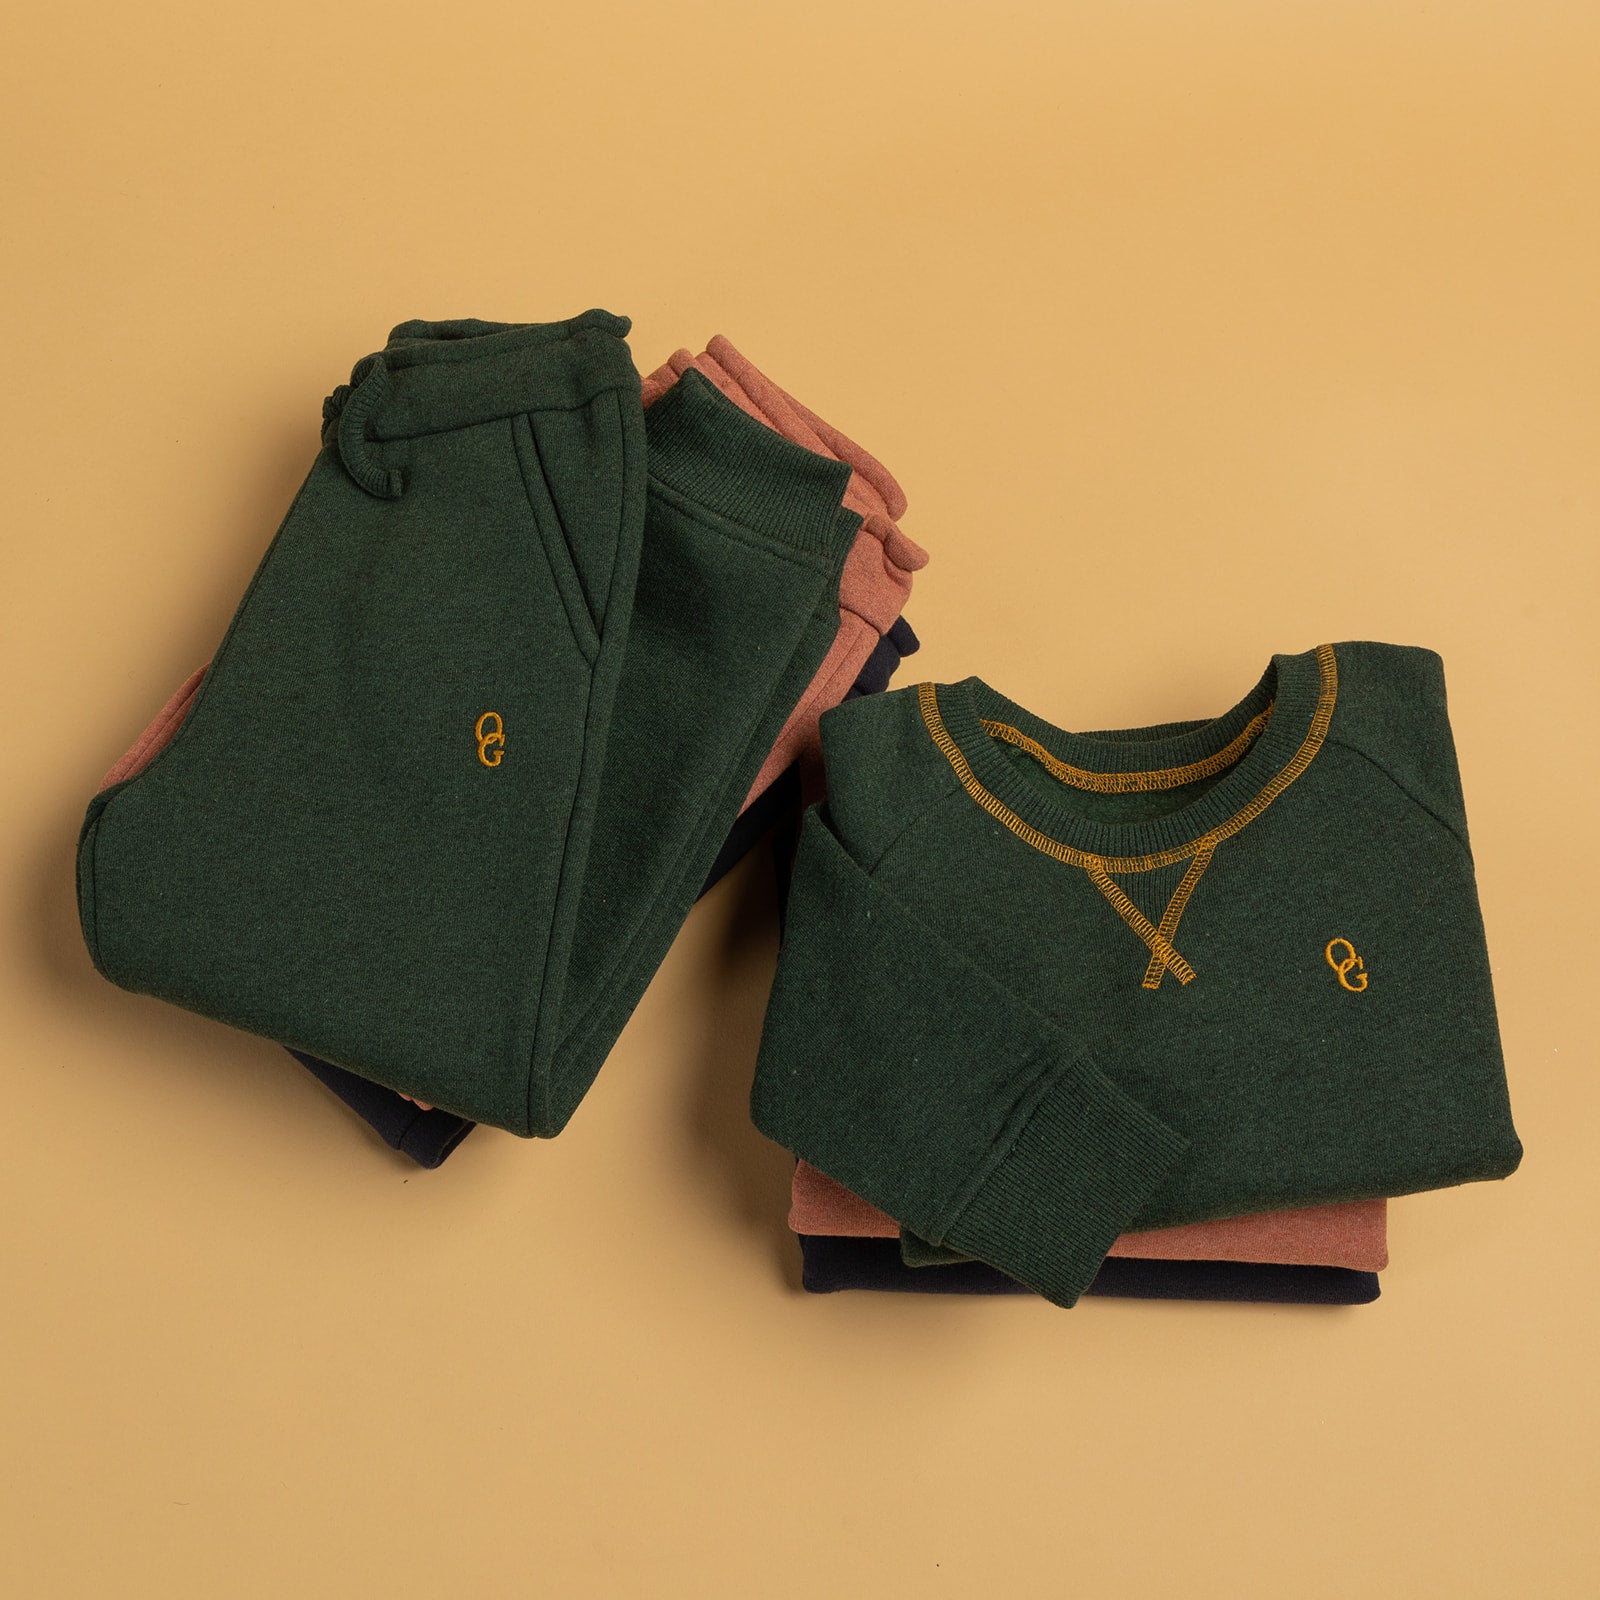 Sweatshirt børn recycled - green, navy, rose